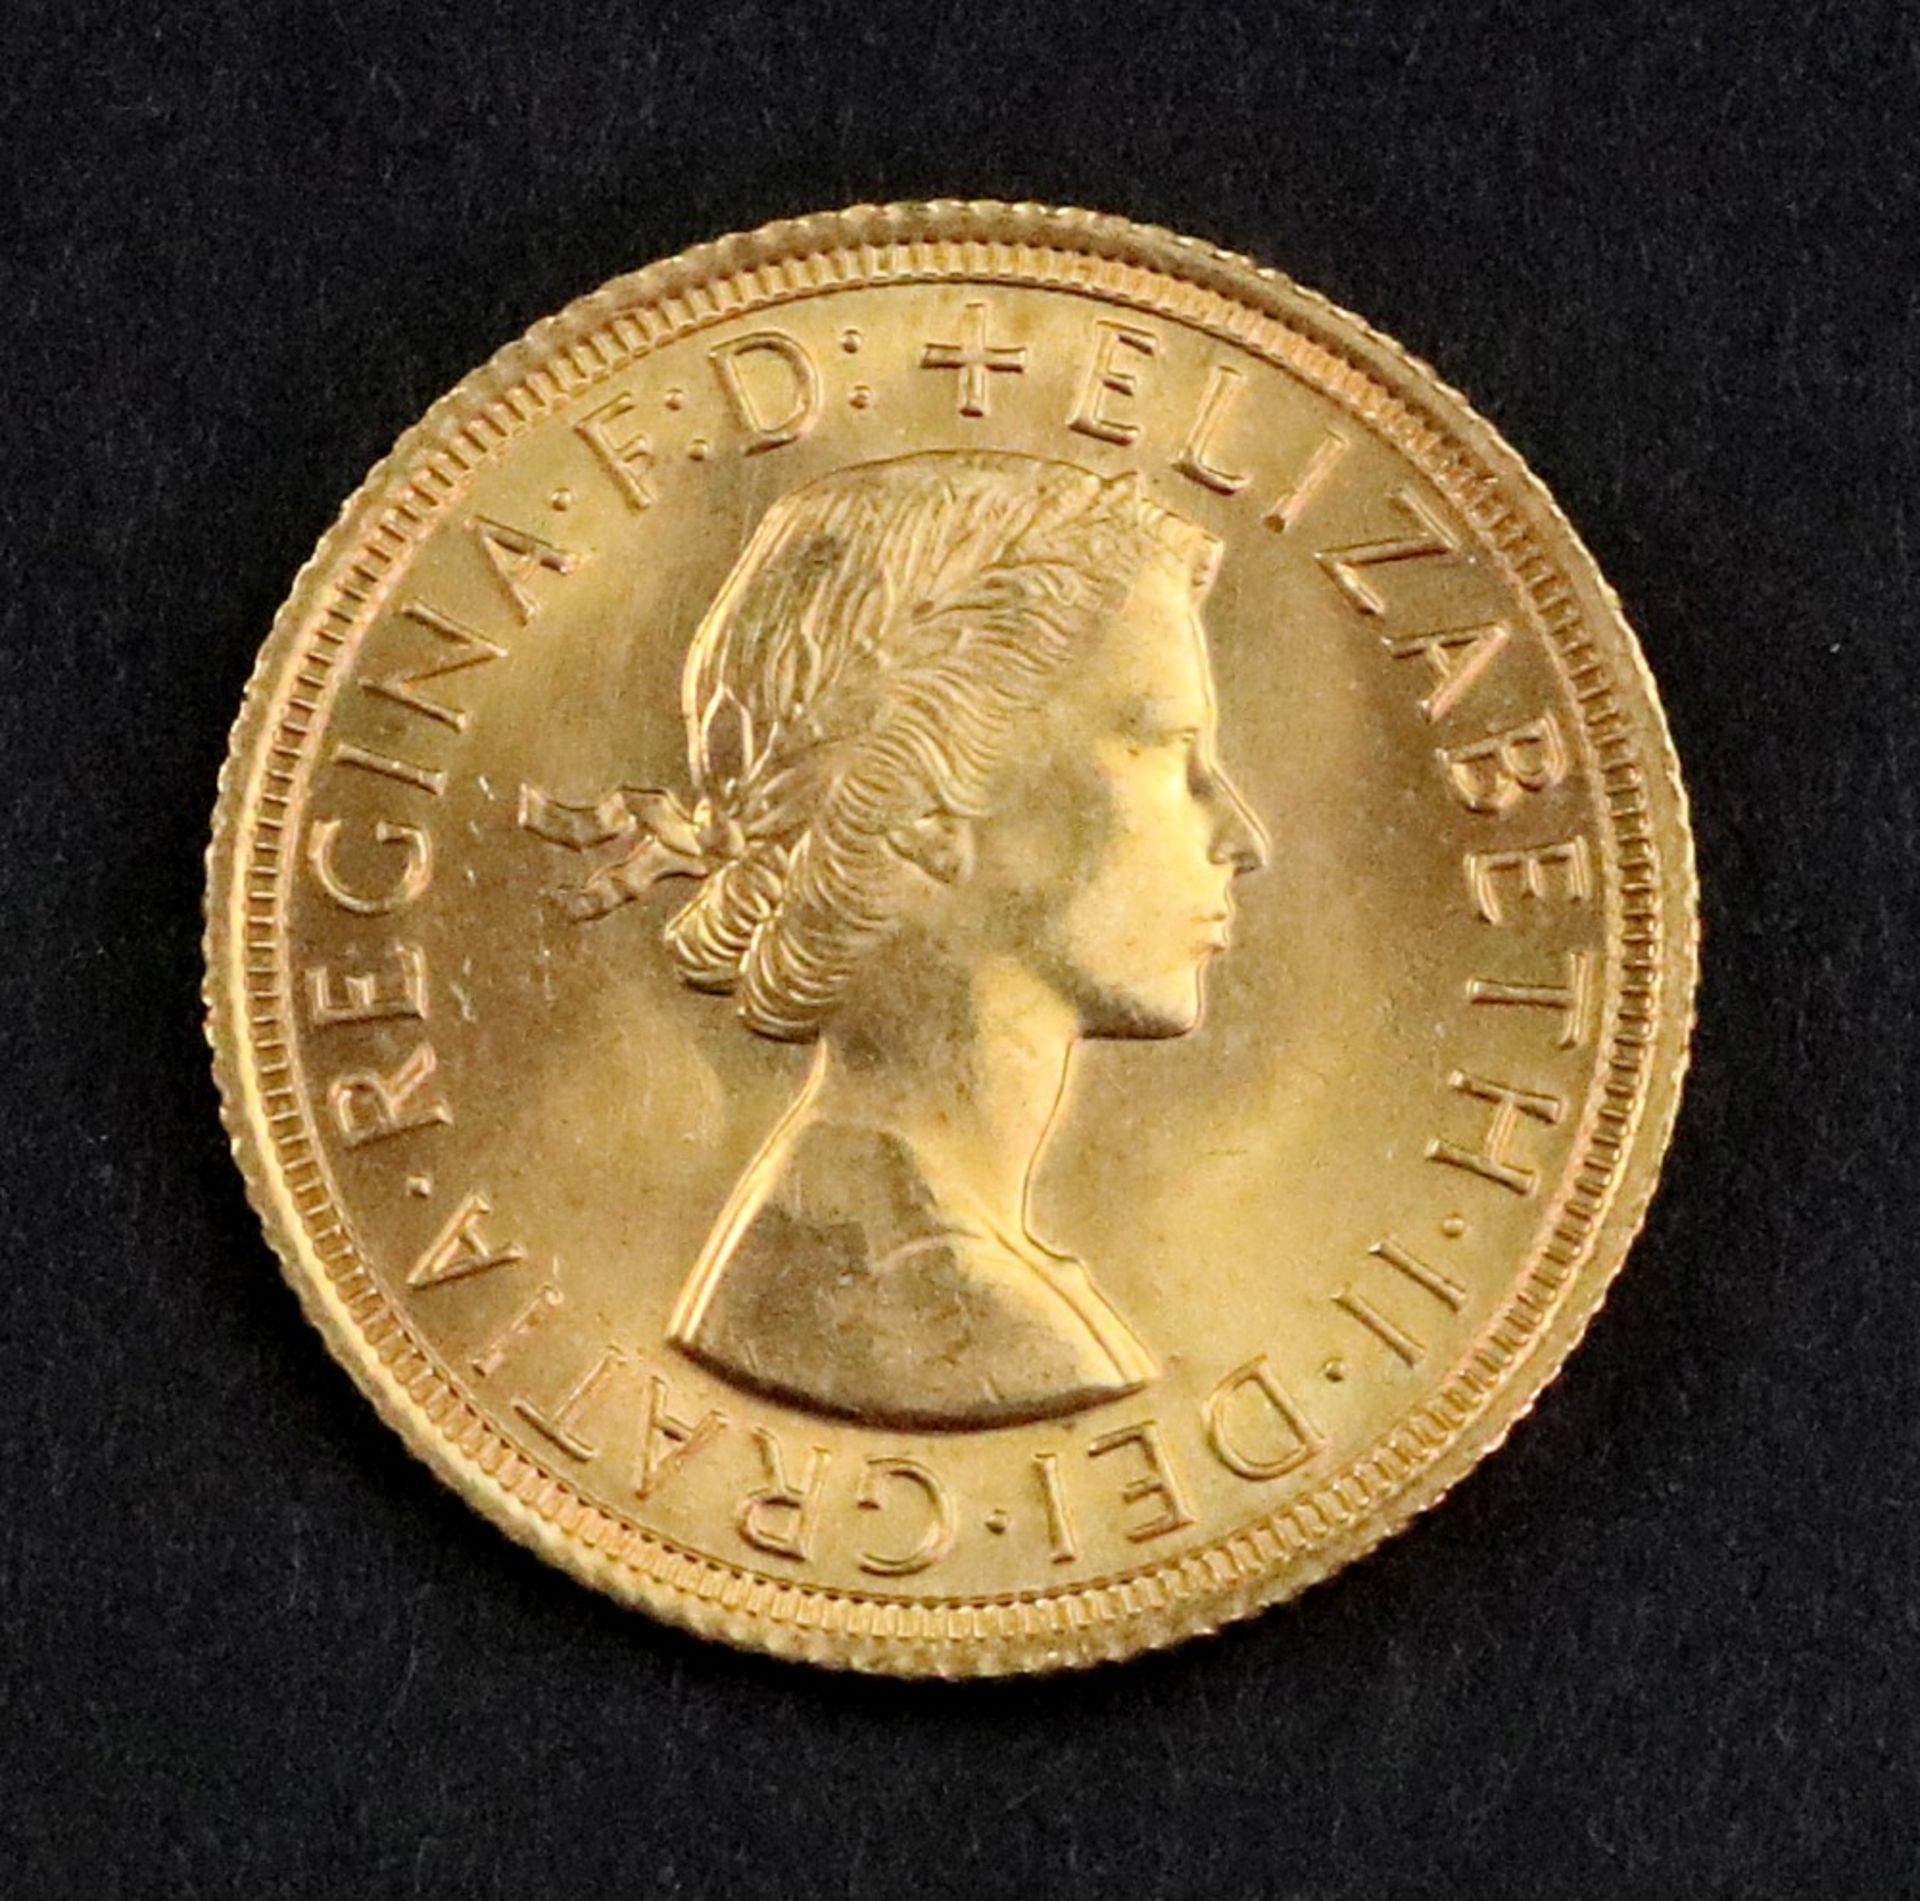 Elizabeth II sovereign 1965. - Image 2 of 2